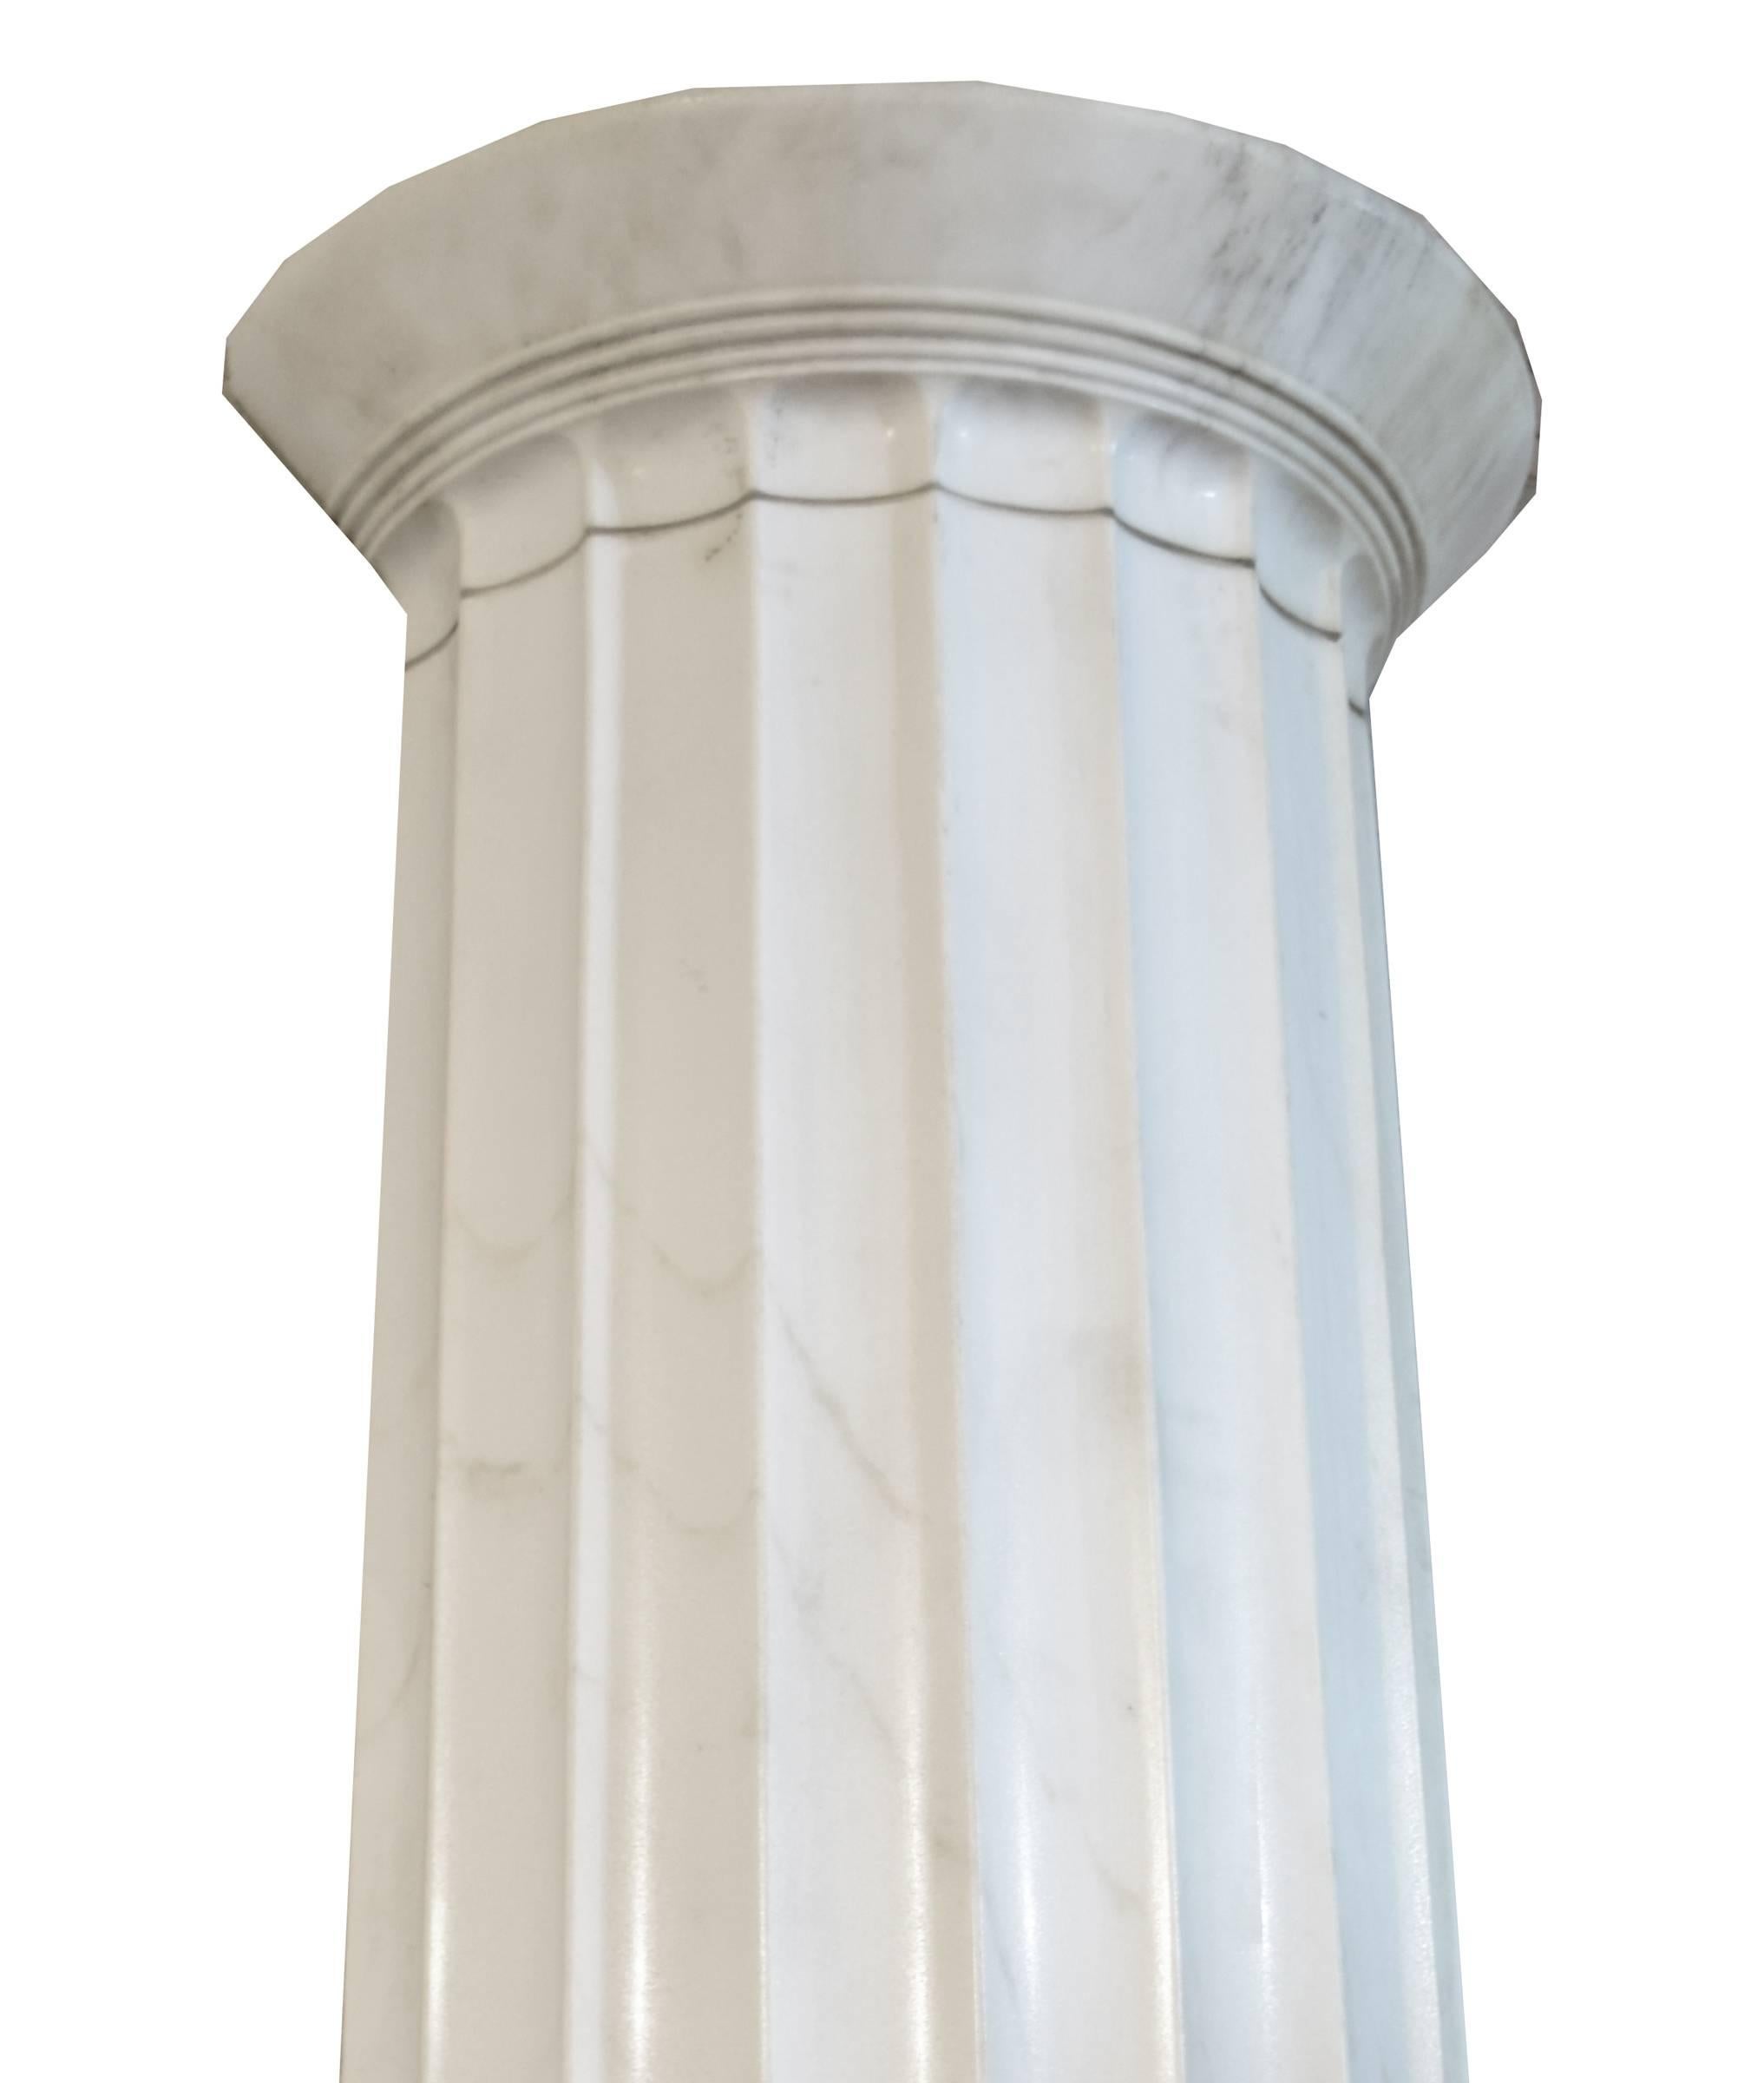 American Pair of White Marble Doric Columns